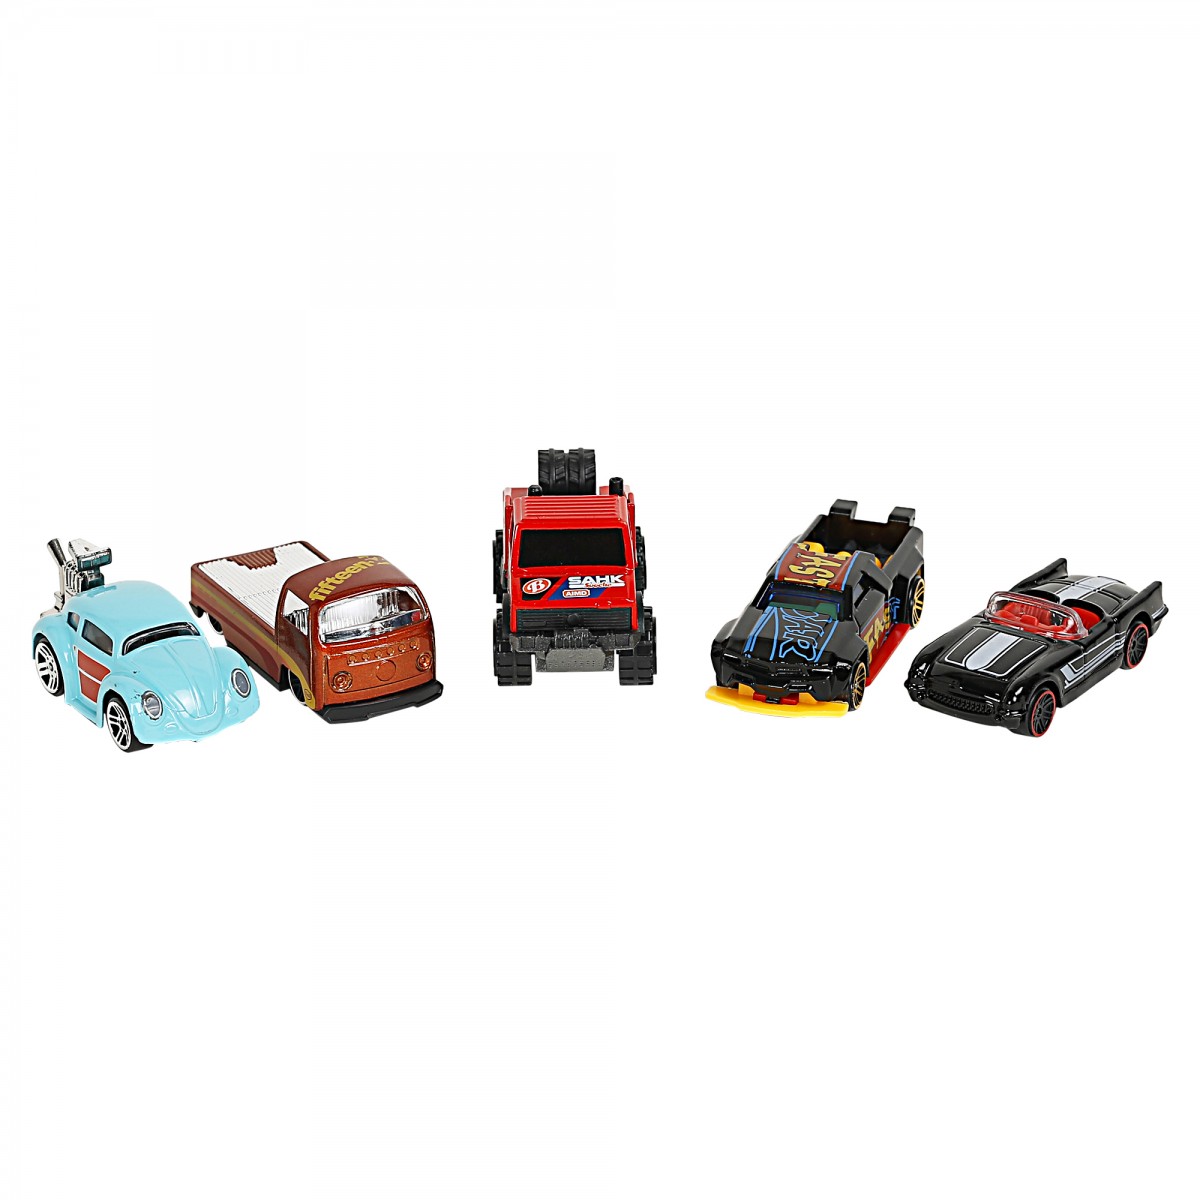 Ralleys Firefleet Street Machines Die Cast Car for Kids, Pack of 5, Multicolour